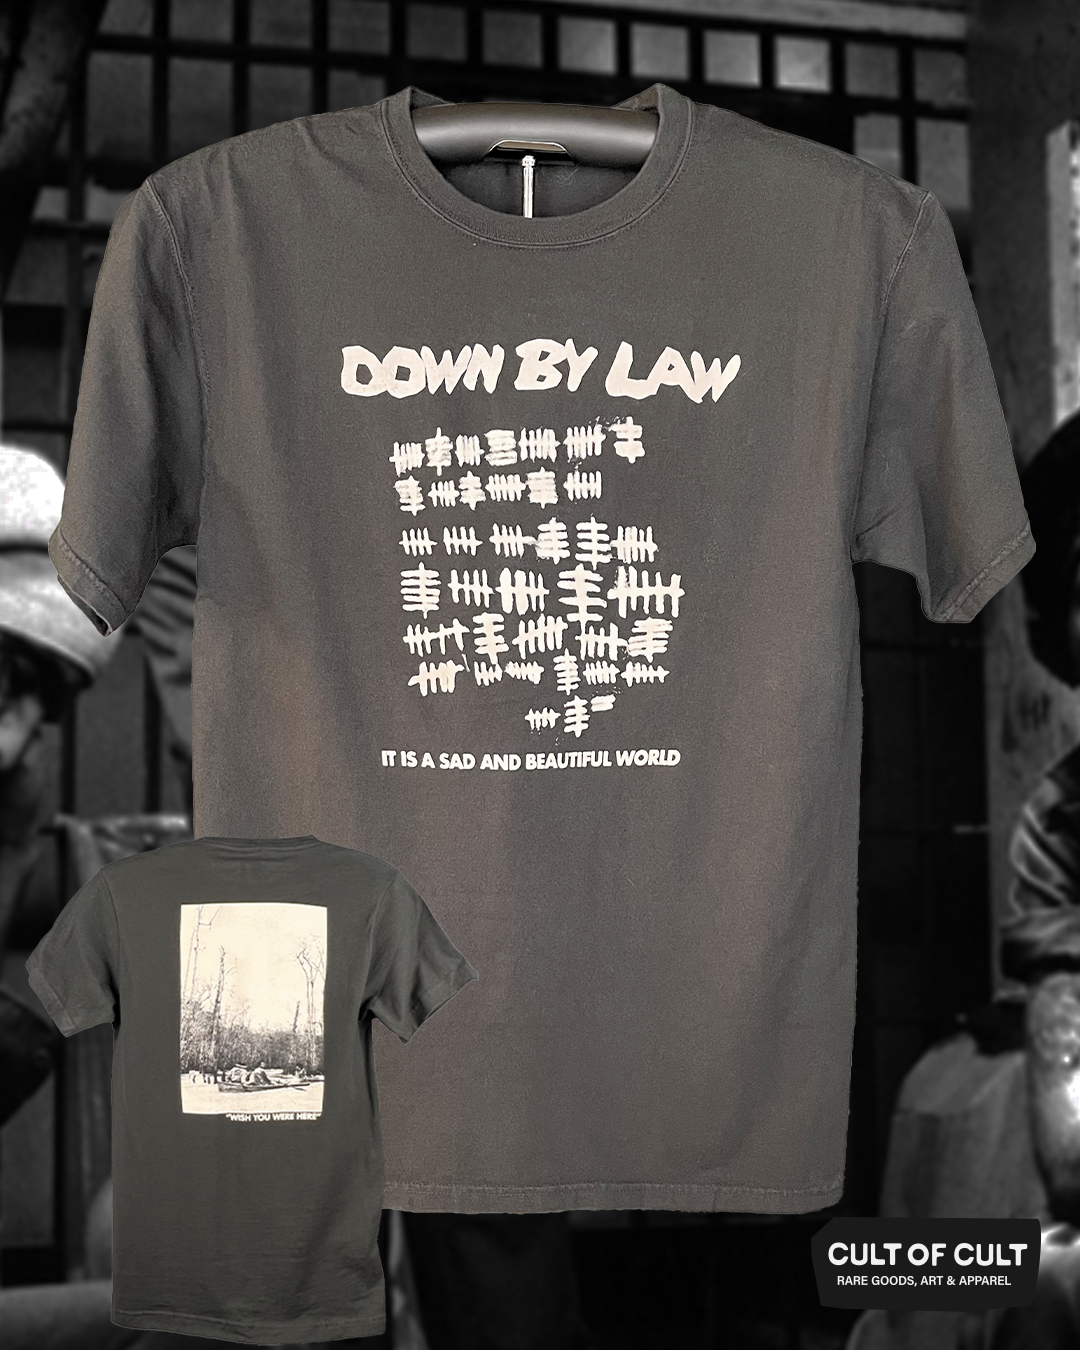 Down By Law Shirt Jim Jarmusch